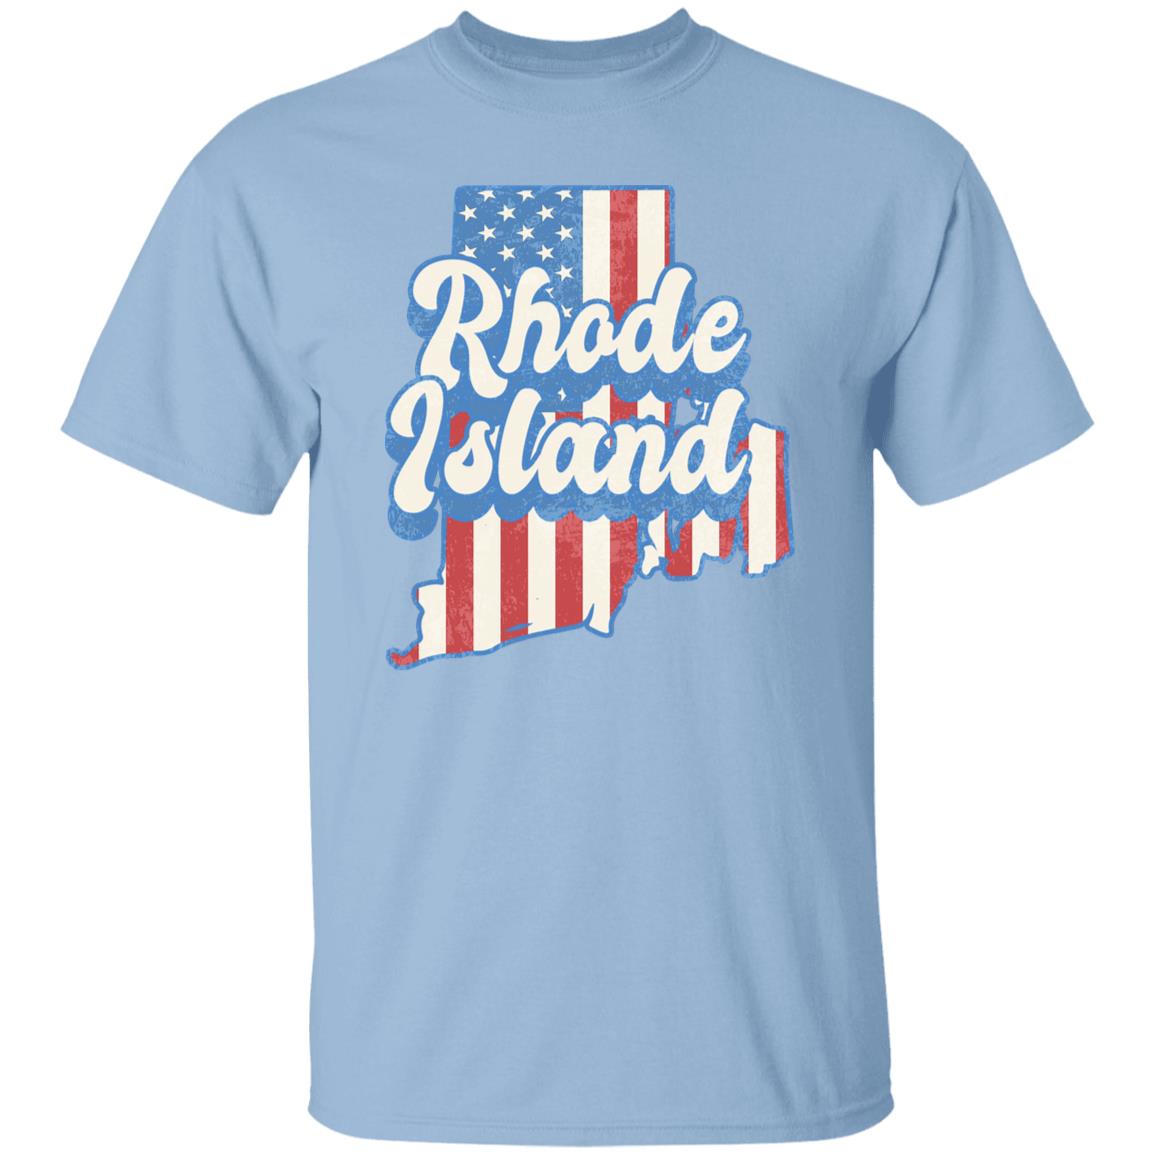 Rhode Island US flag Unisex T-Shirt American patriotic RI state tee White Ash Blue-Light Blue-Family-Gift-Planet